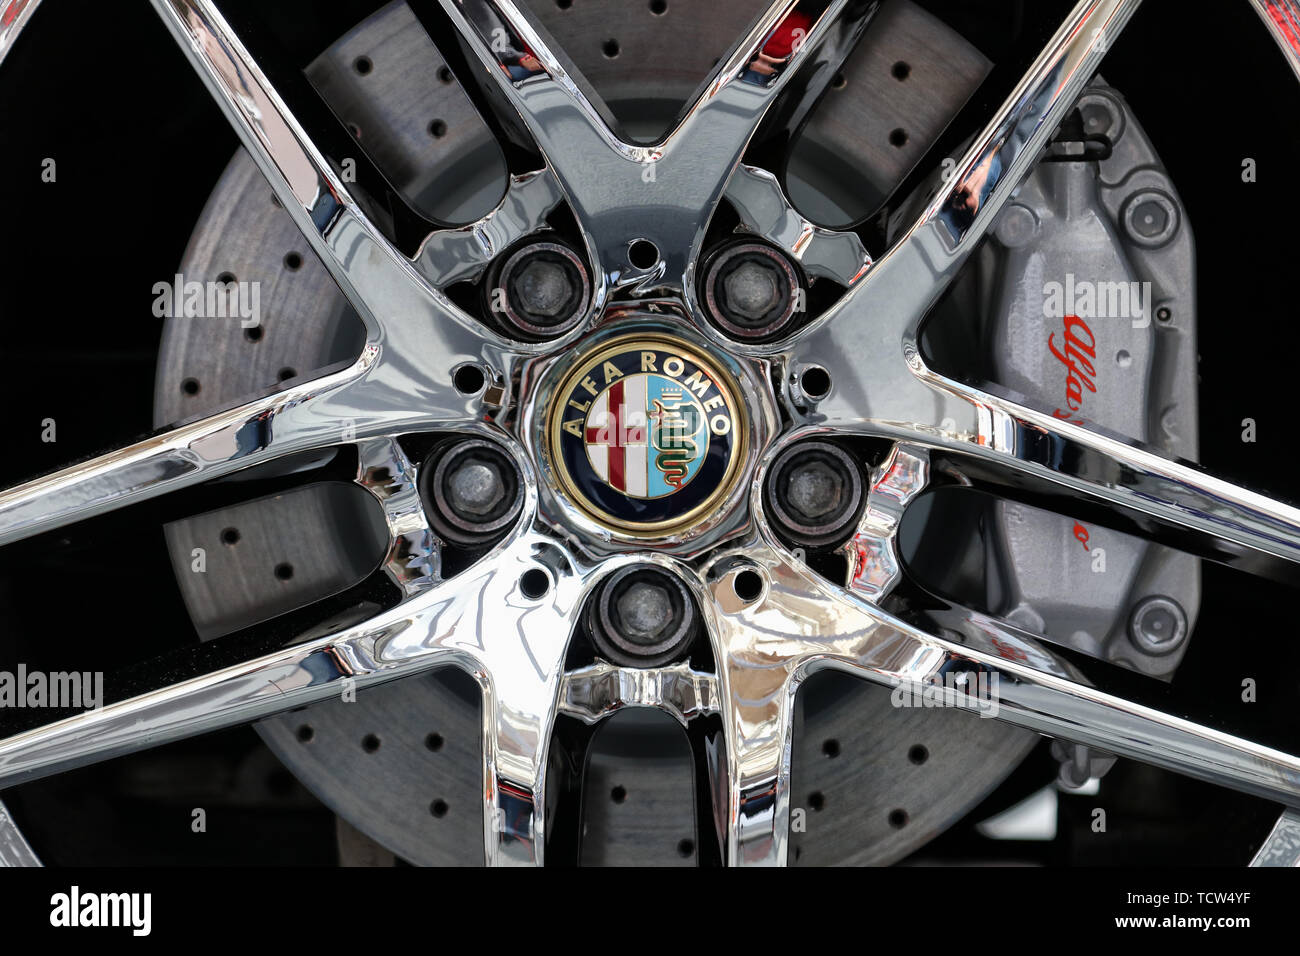 MODENA, ITALY, May 2019 - Motor Valley Fest exhibition, Alfa Romeo C8 Competition wheel design Stock Photo